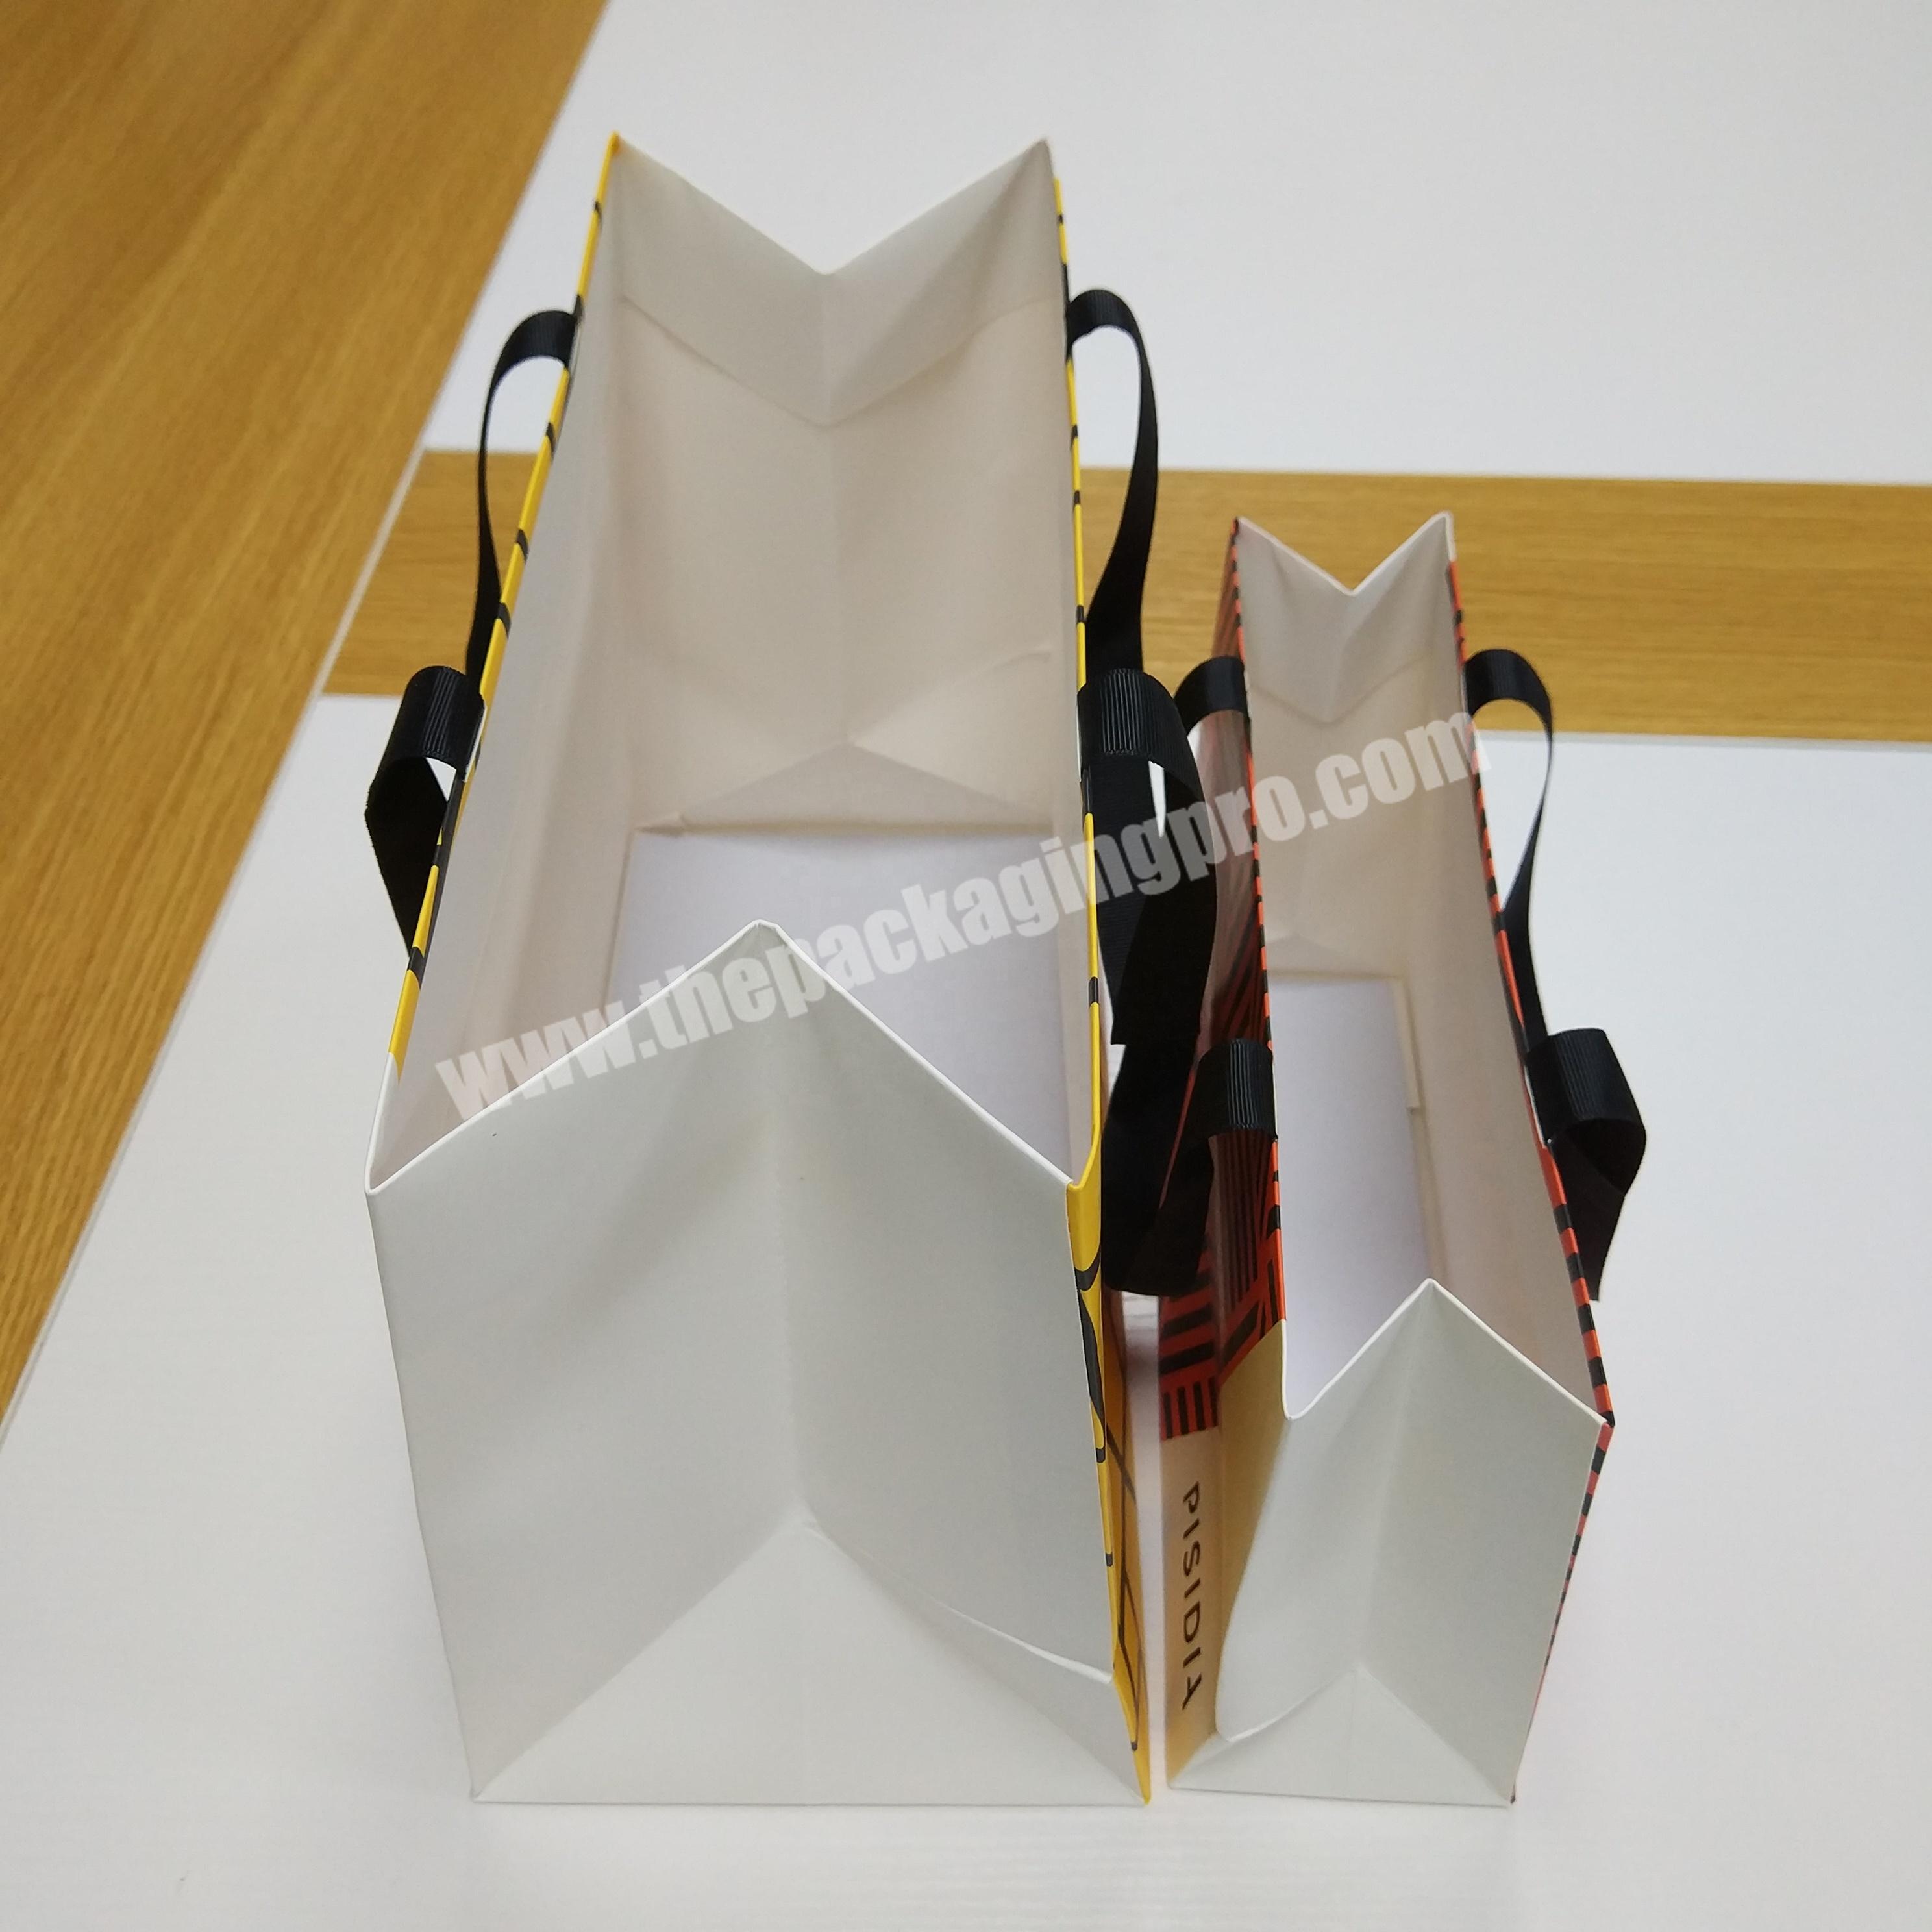 Horizontal Shape Shopping Bag Full Color Printed with Grosgrain Ribbon Handles wholesaler